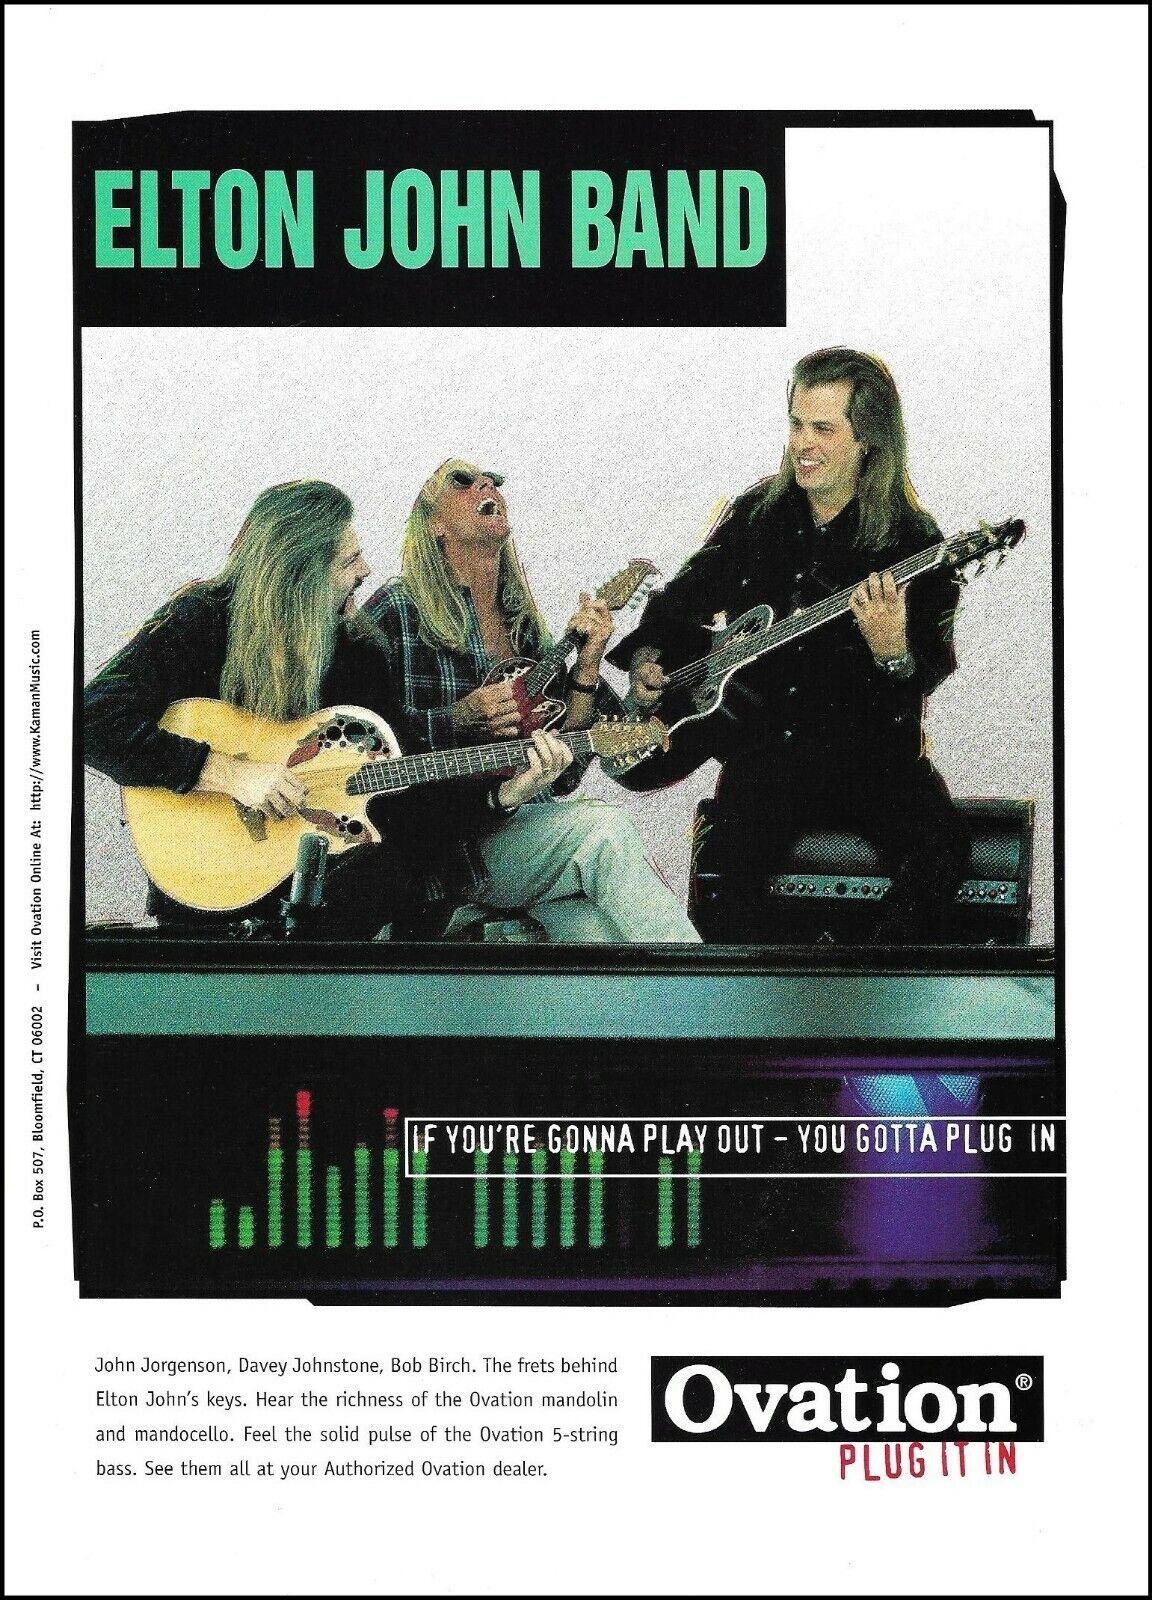 Elton John Band John Jorgenson Davey Johnstone Bob Birch 1997 Ovation guitar ad